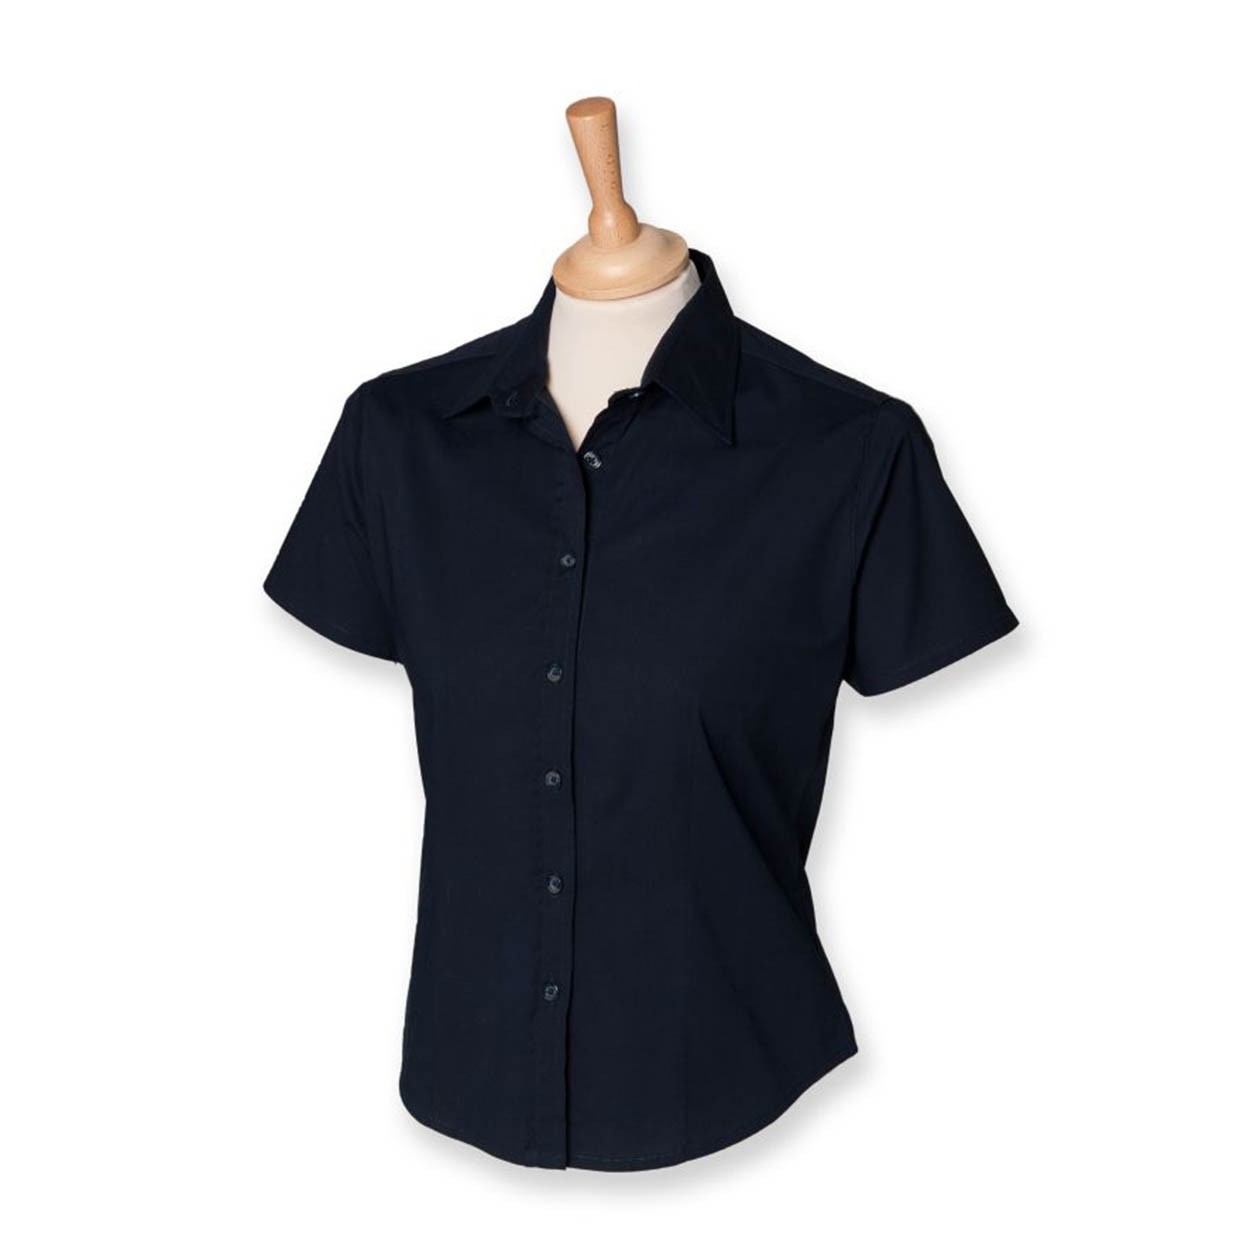 Henbury H540 Ladies Fitted Short Sleeve Blouse - Ladies Short Sleeve Work  Shirts - Work Shirts - Shirts - Leisurewear - Best Workwear